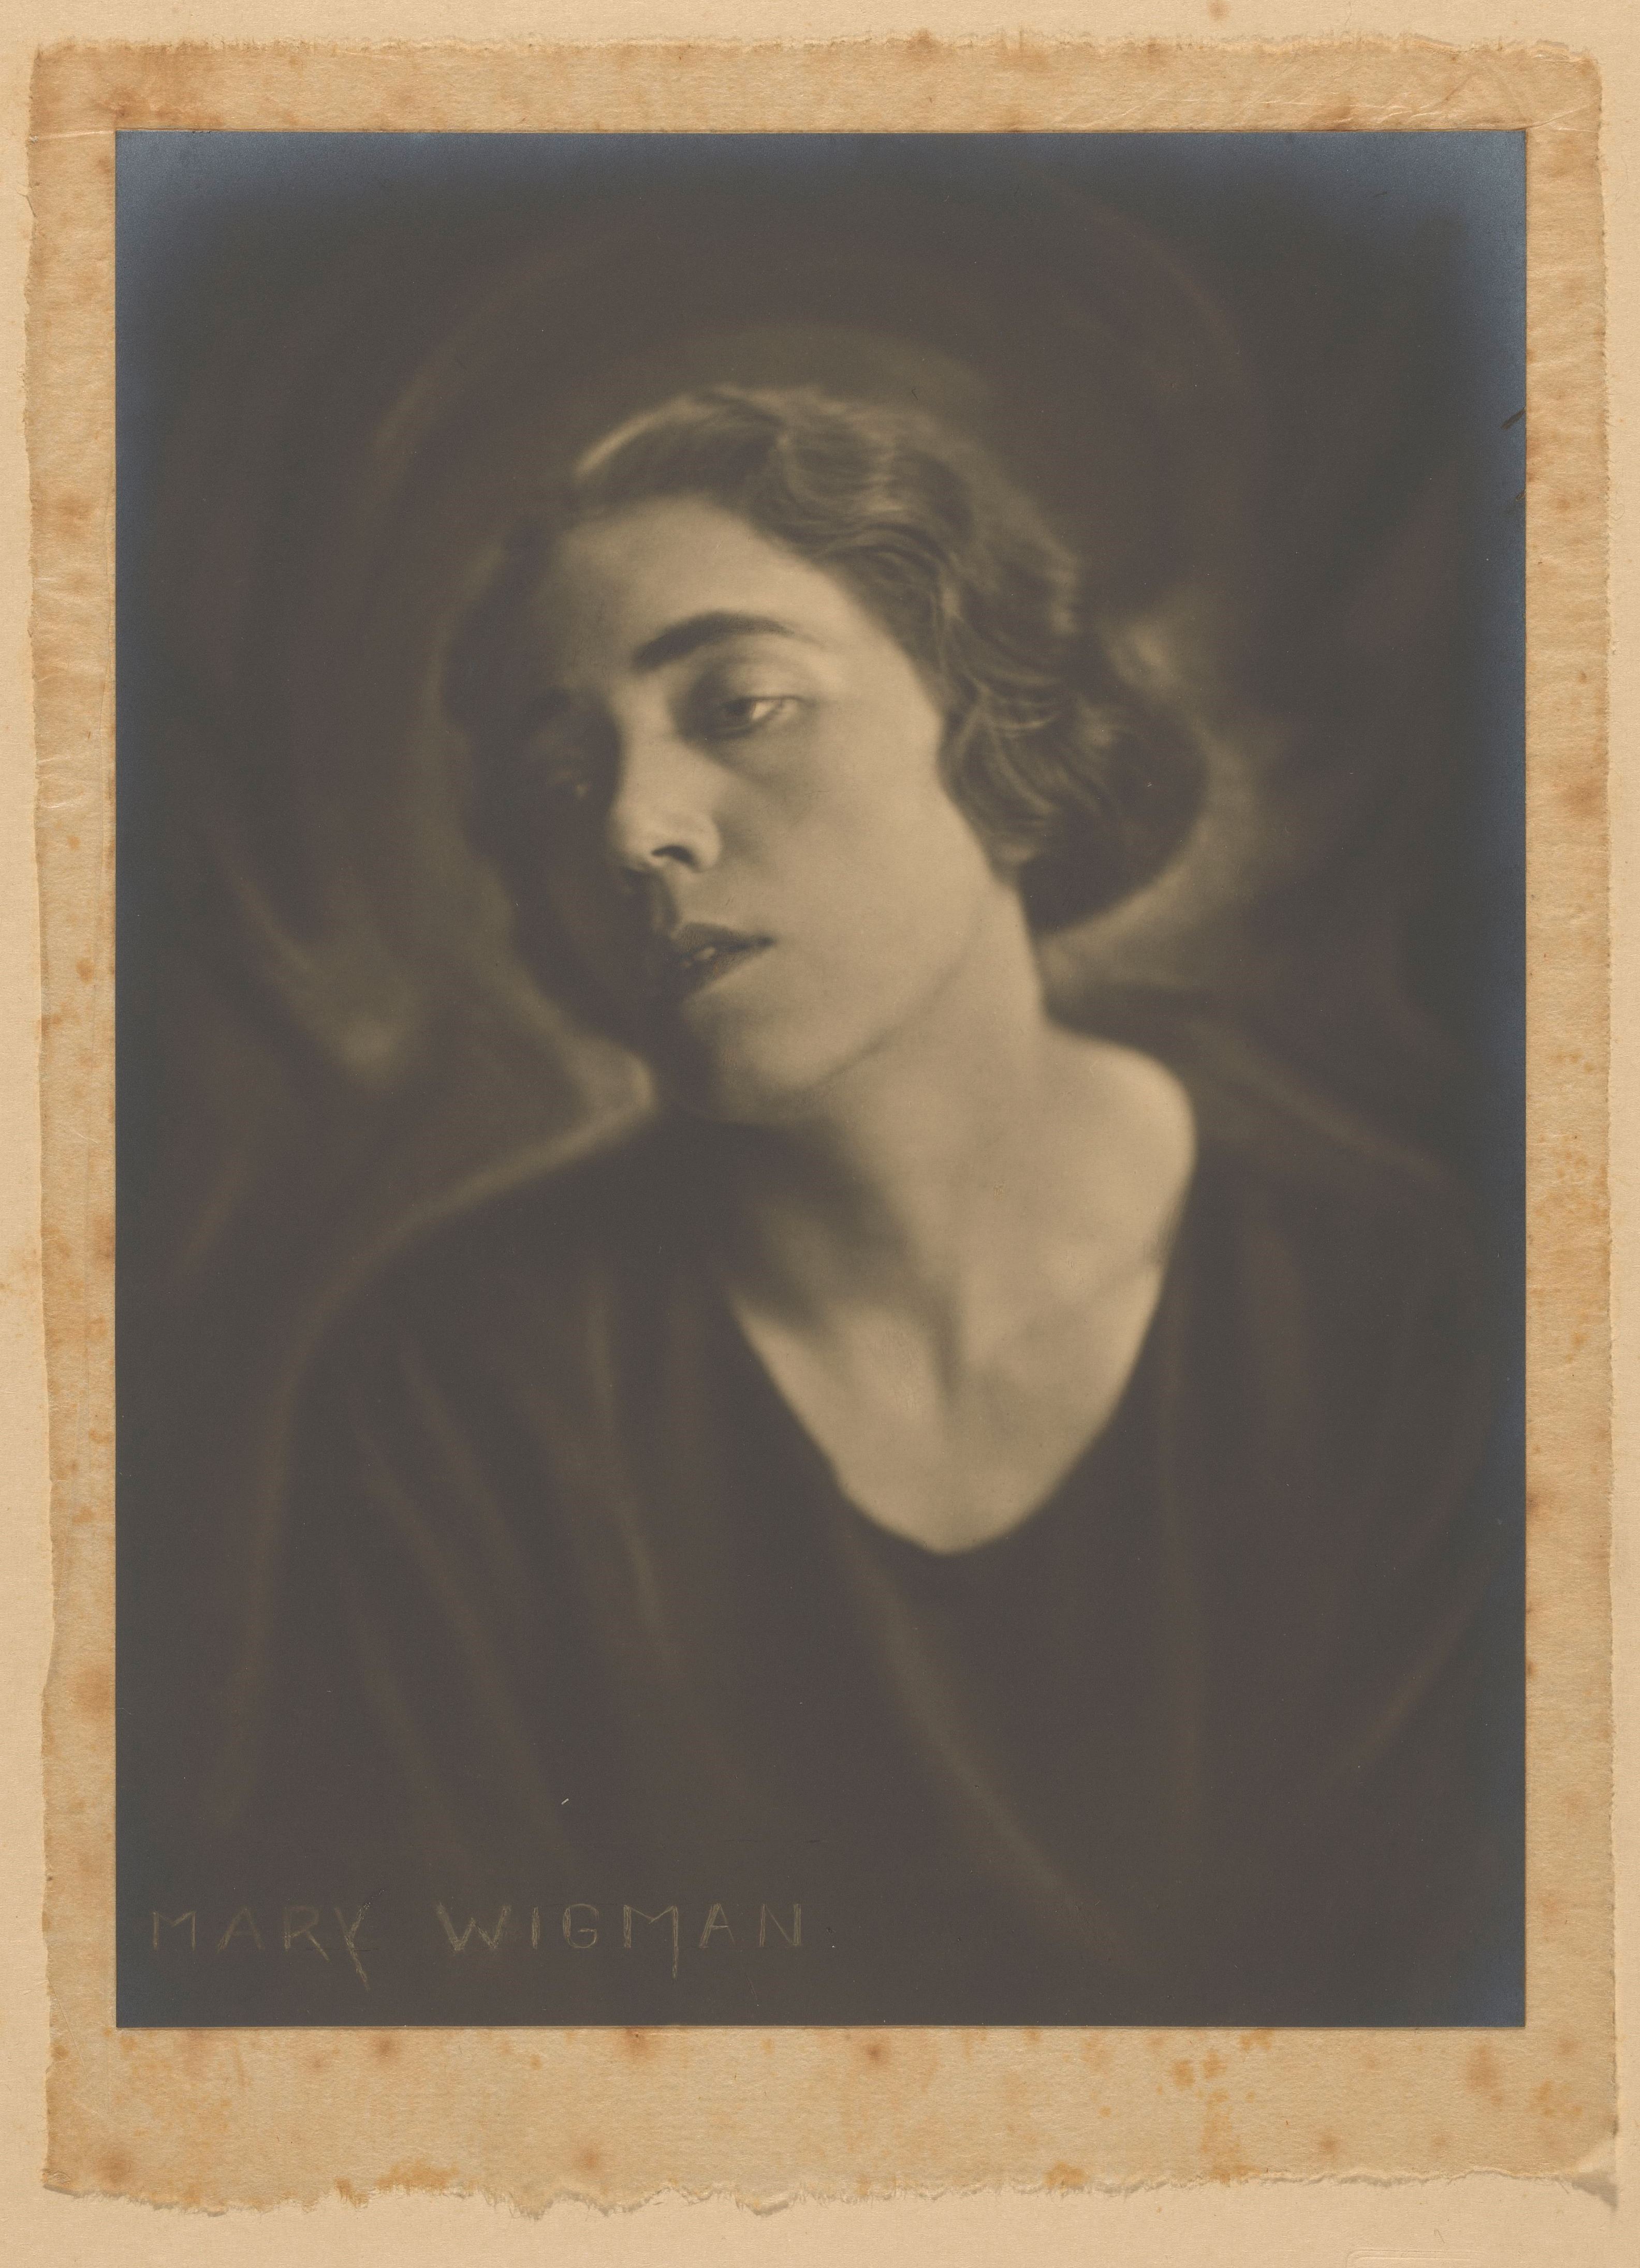 Jacob Merkelbach :: Portret danseres Mary Wigman, buste. Mary Wigman (titel op object), 1920-1930. | src Rijksmuseum